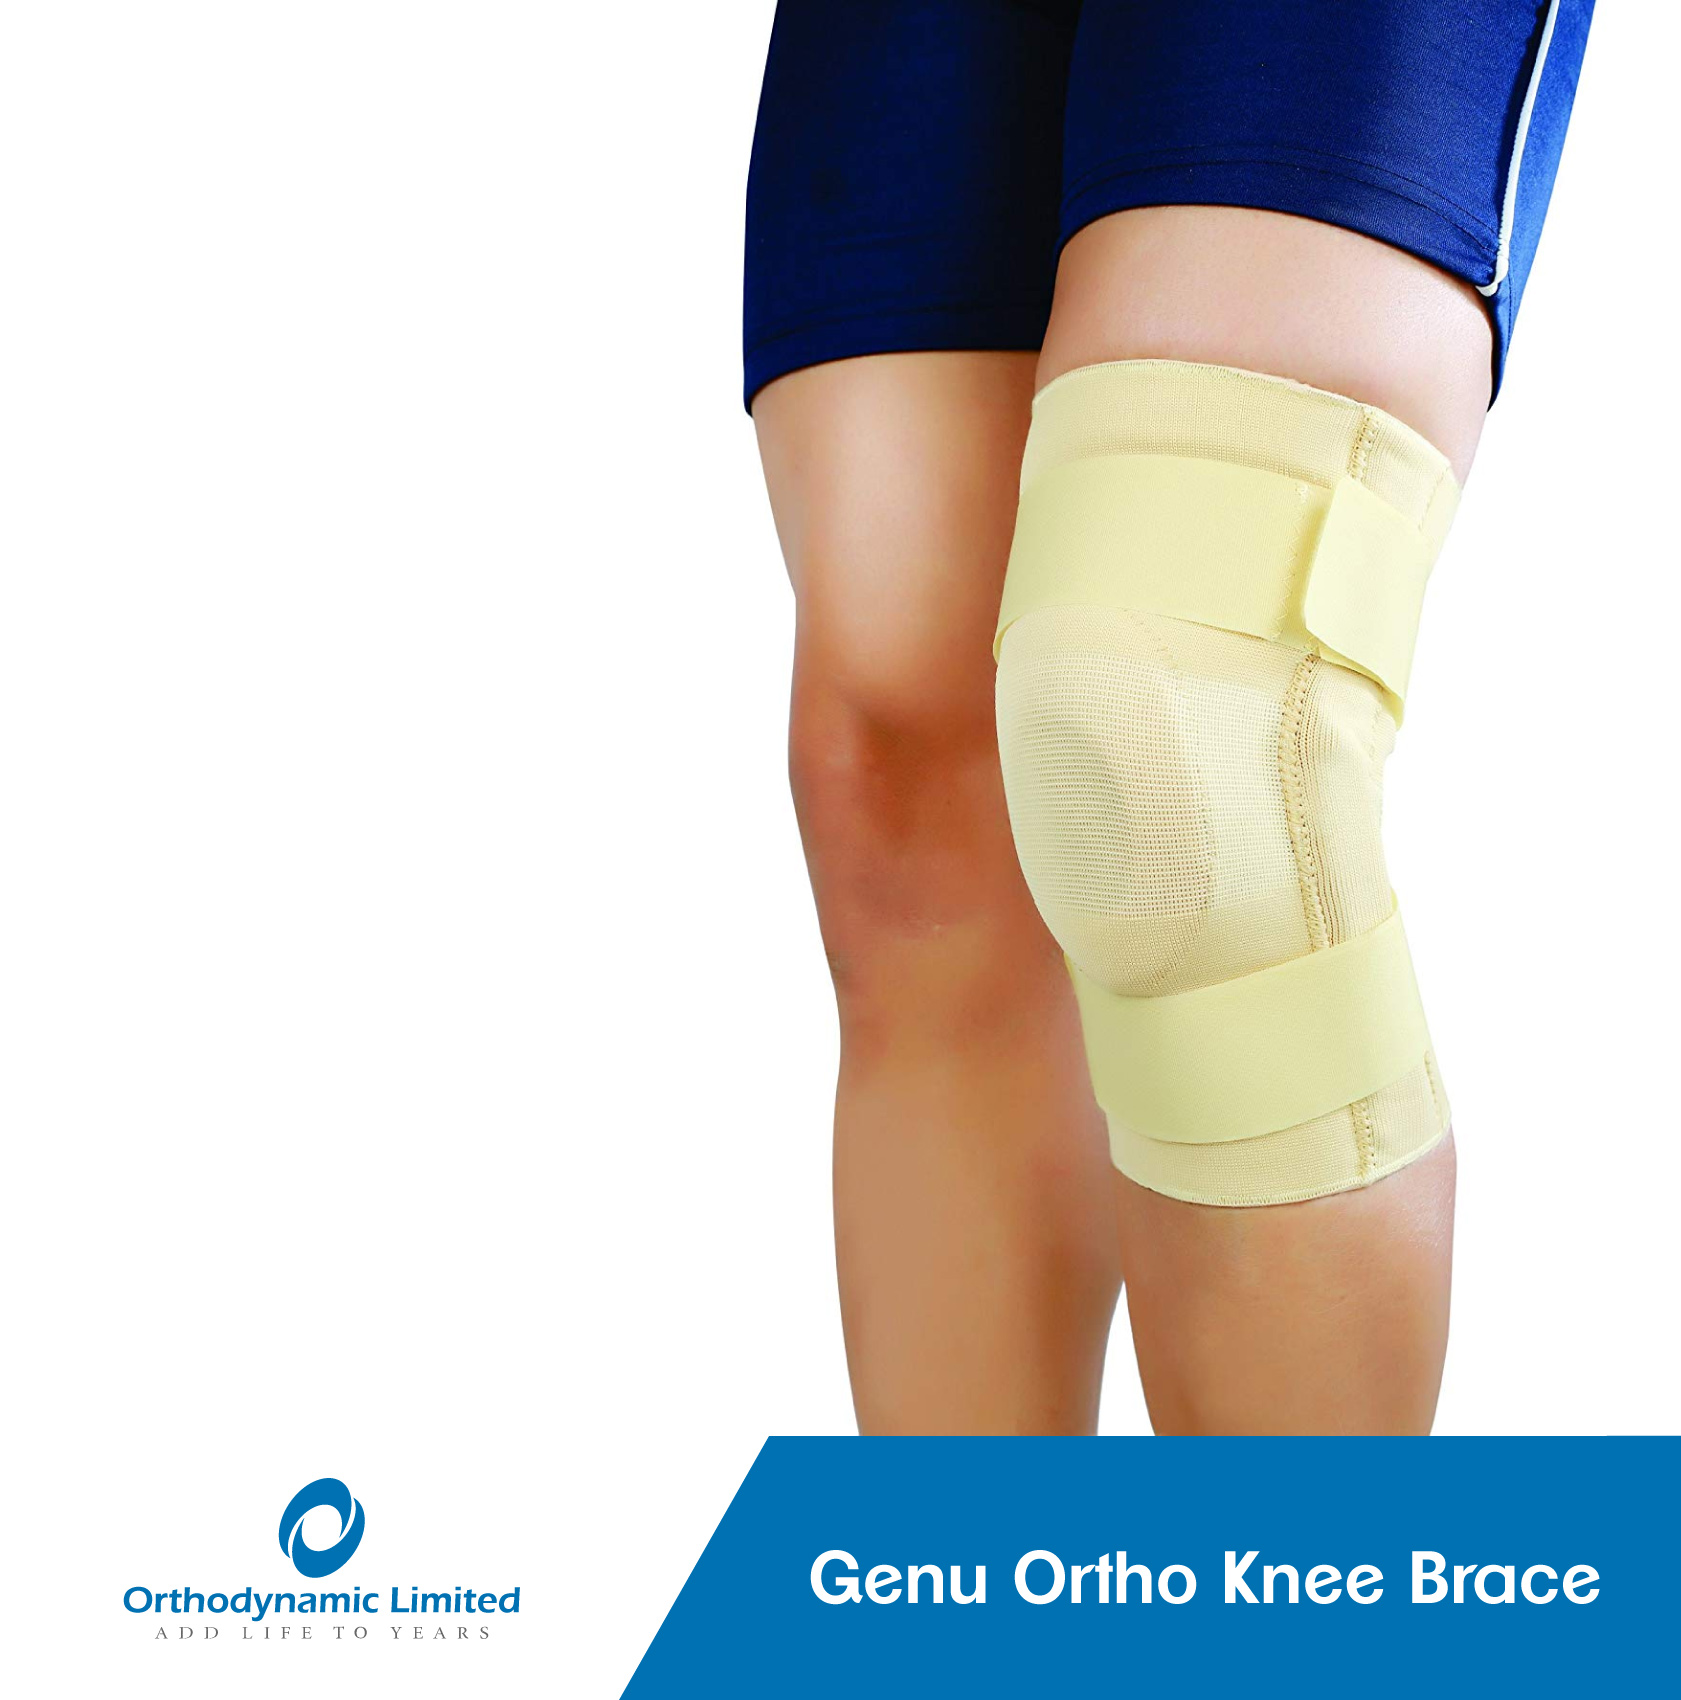 Genu Ortho knee brace - Orthodynamic Ltd - Call 0705442020